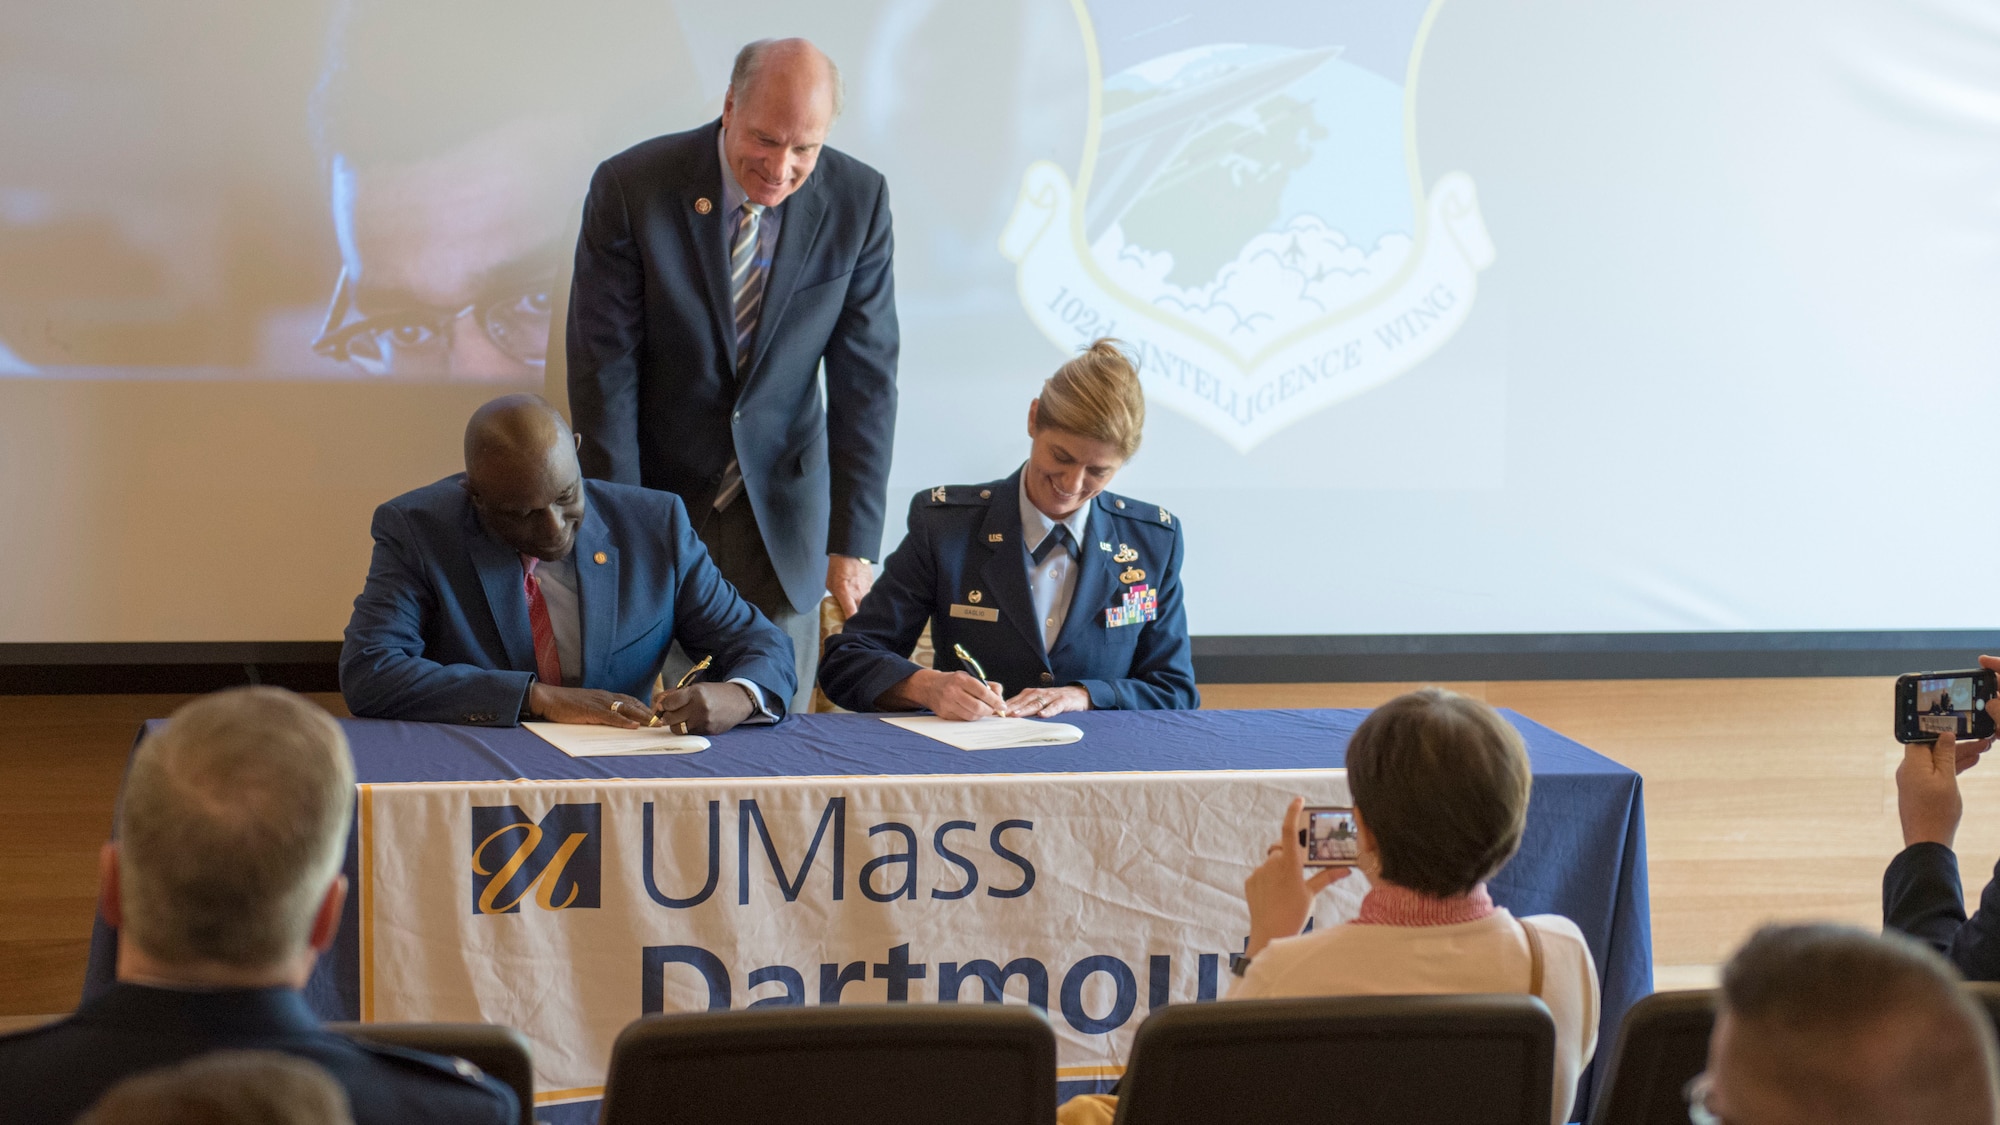 102IW Commander signs Memorandum of Understanding with UMass Dartmouth